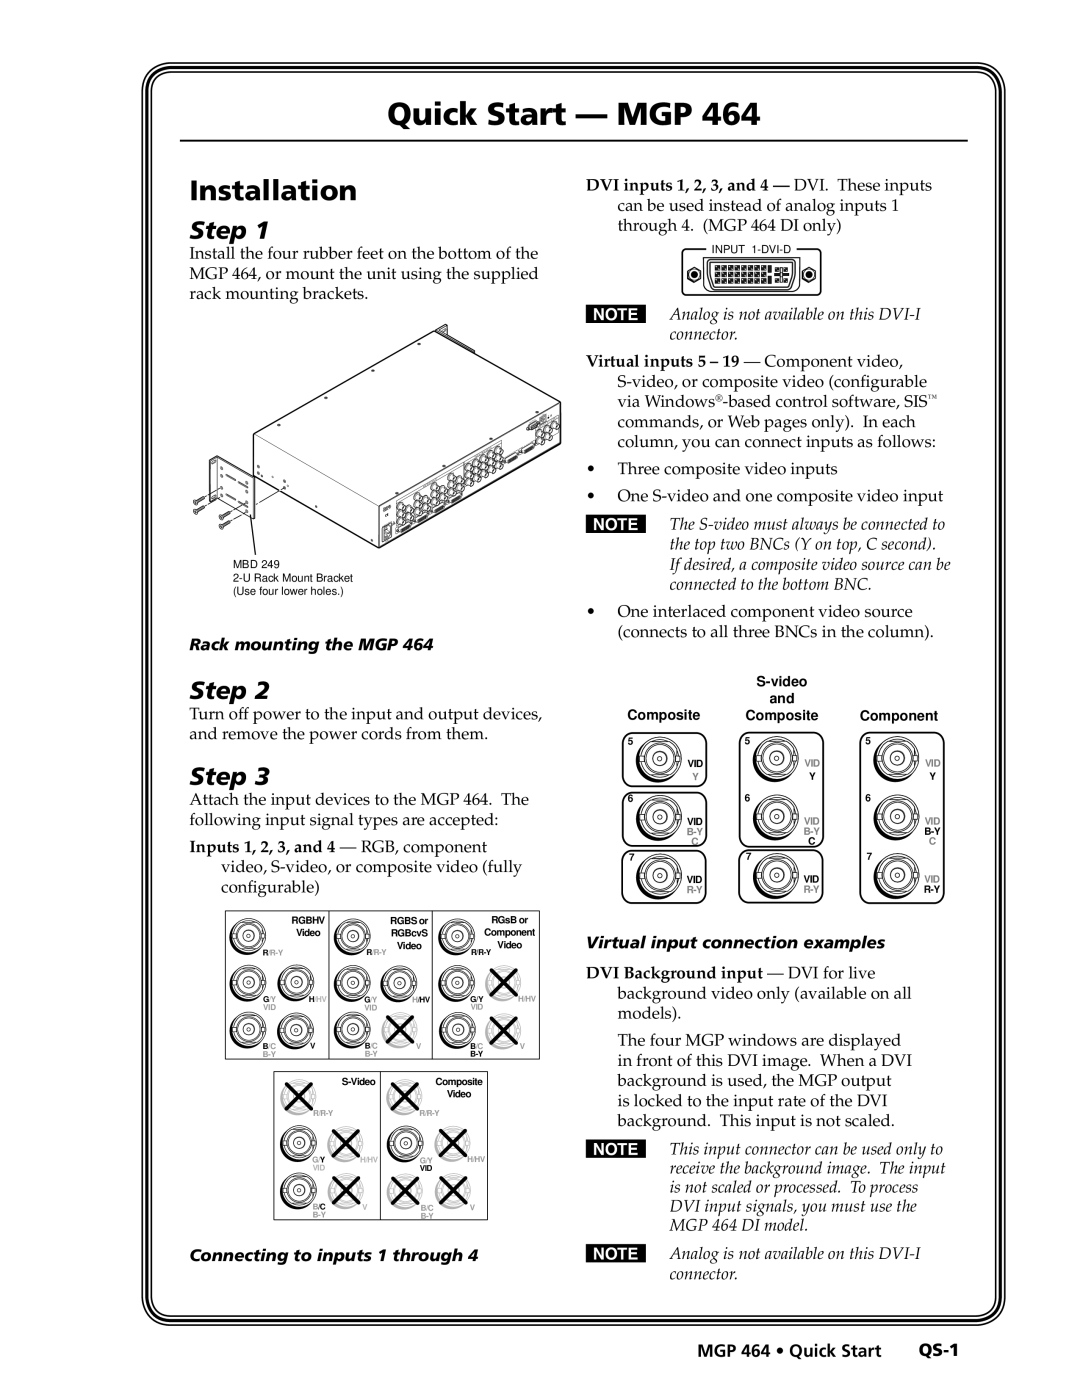 Extron electronic MGP 464 DI manual Quick Start - MGP, Installation, Step, Preliminary, Rack mounting the MGP 